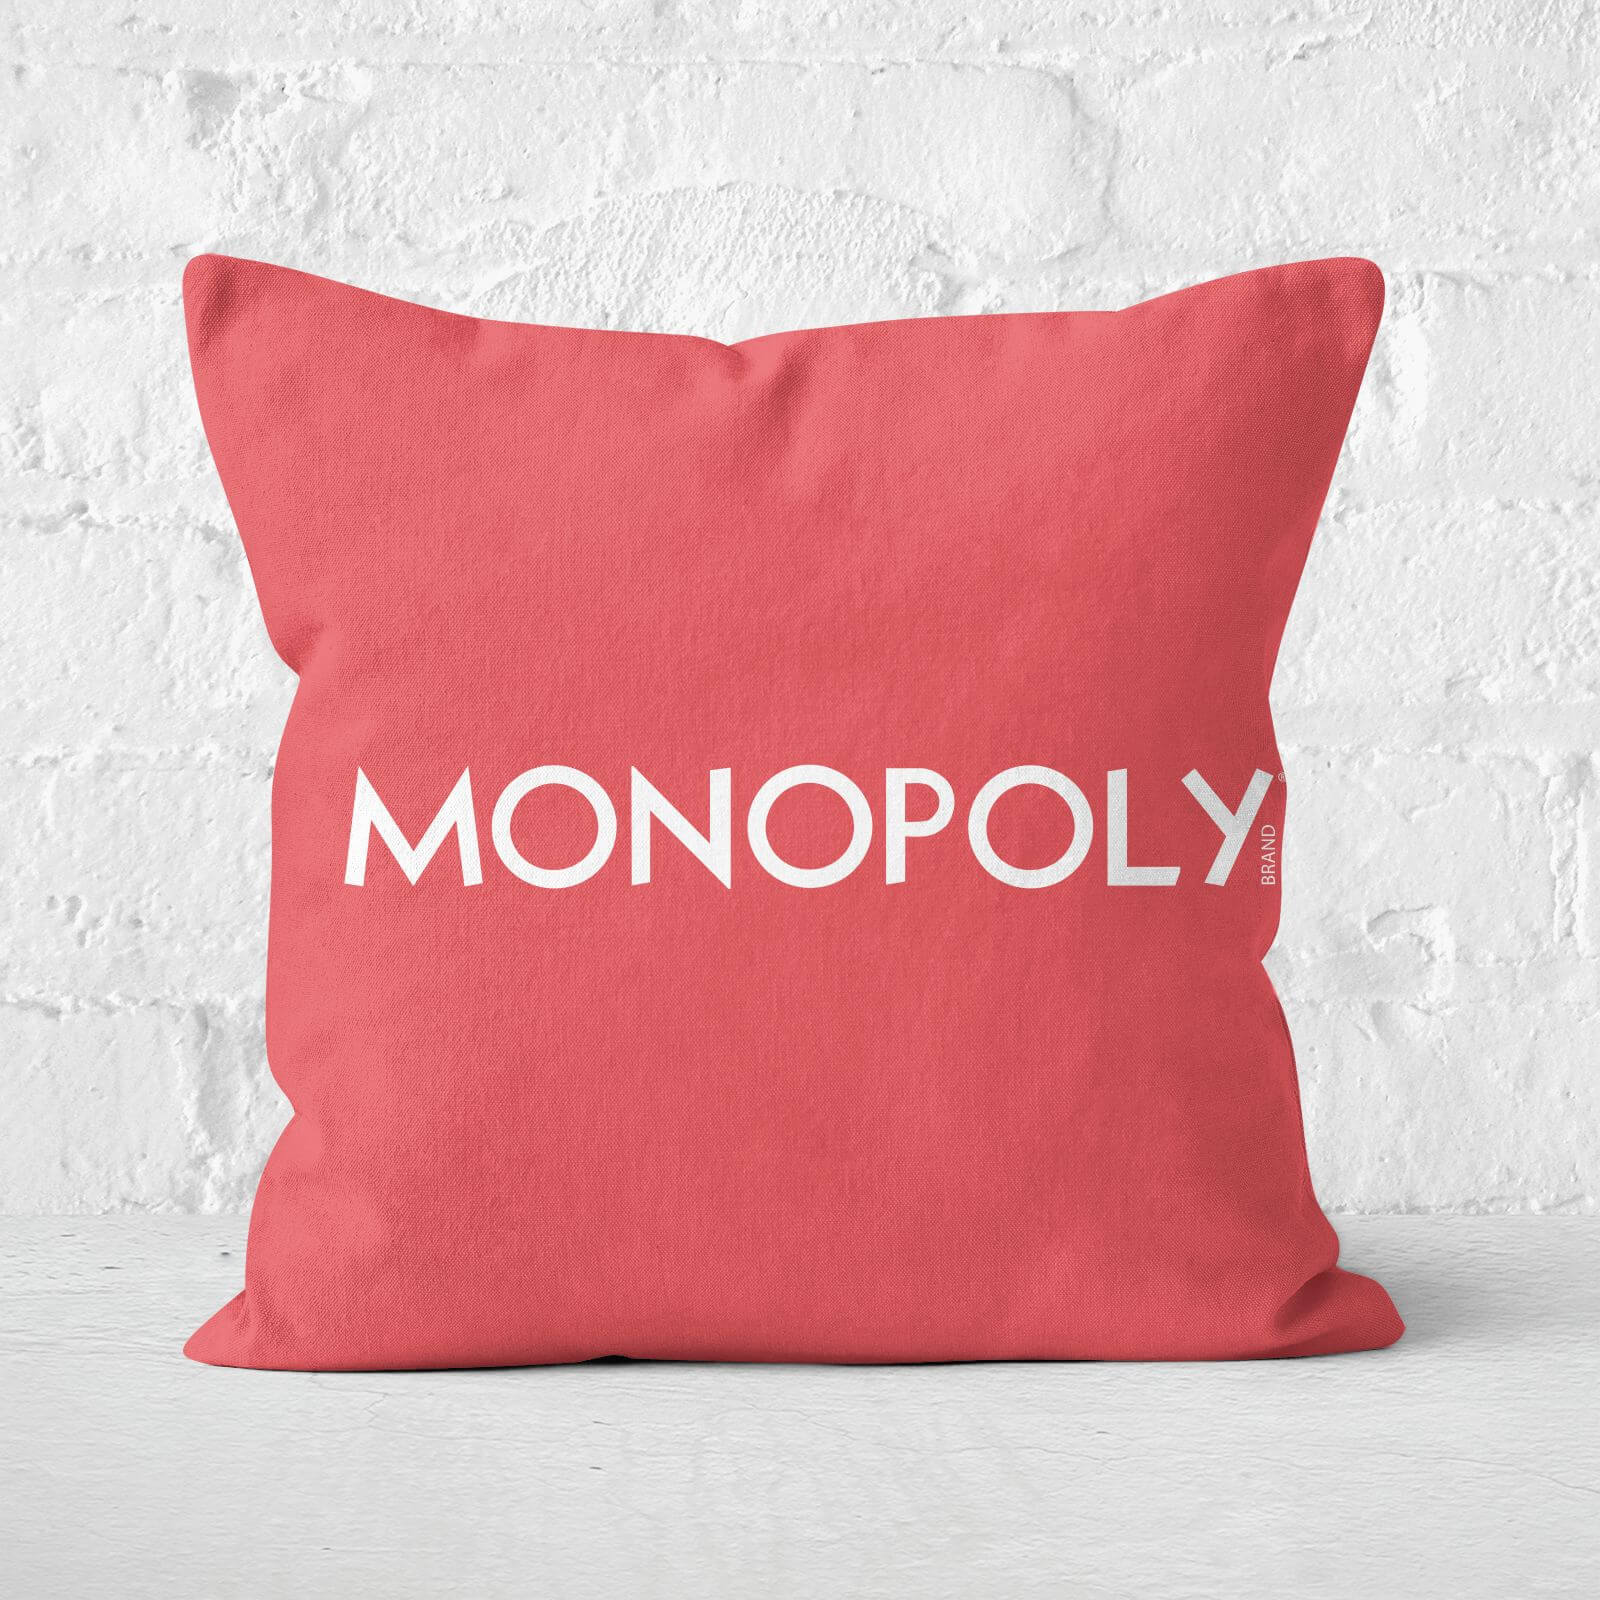 Monopoly Go Square Cushion - 40x40cm - Soft Touch